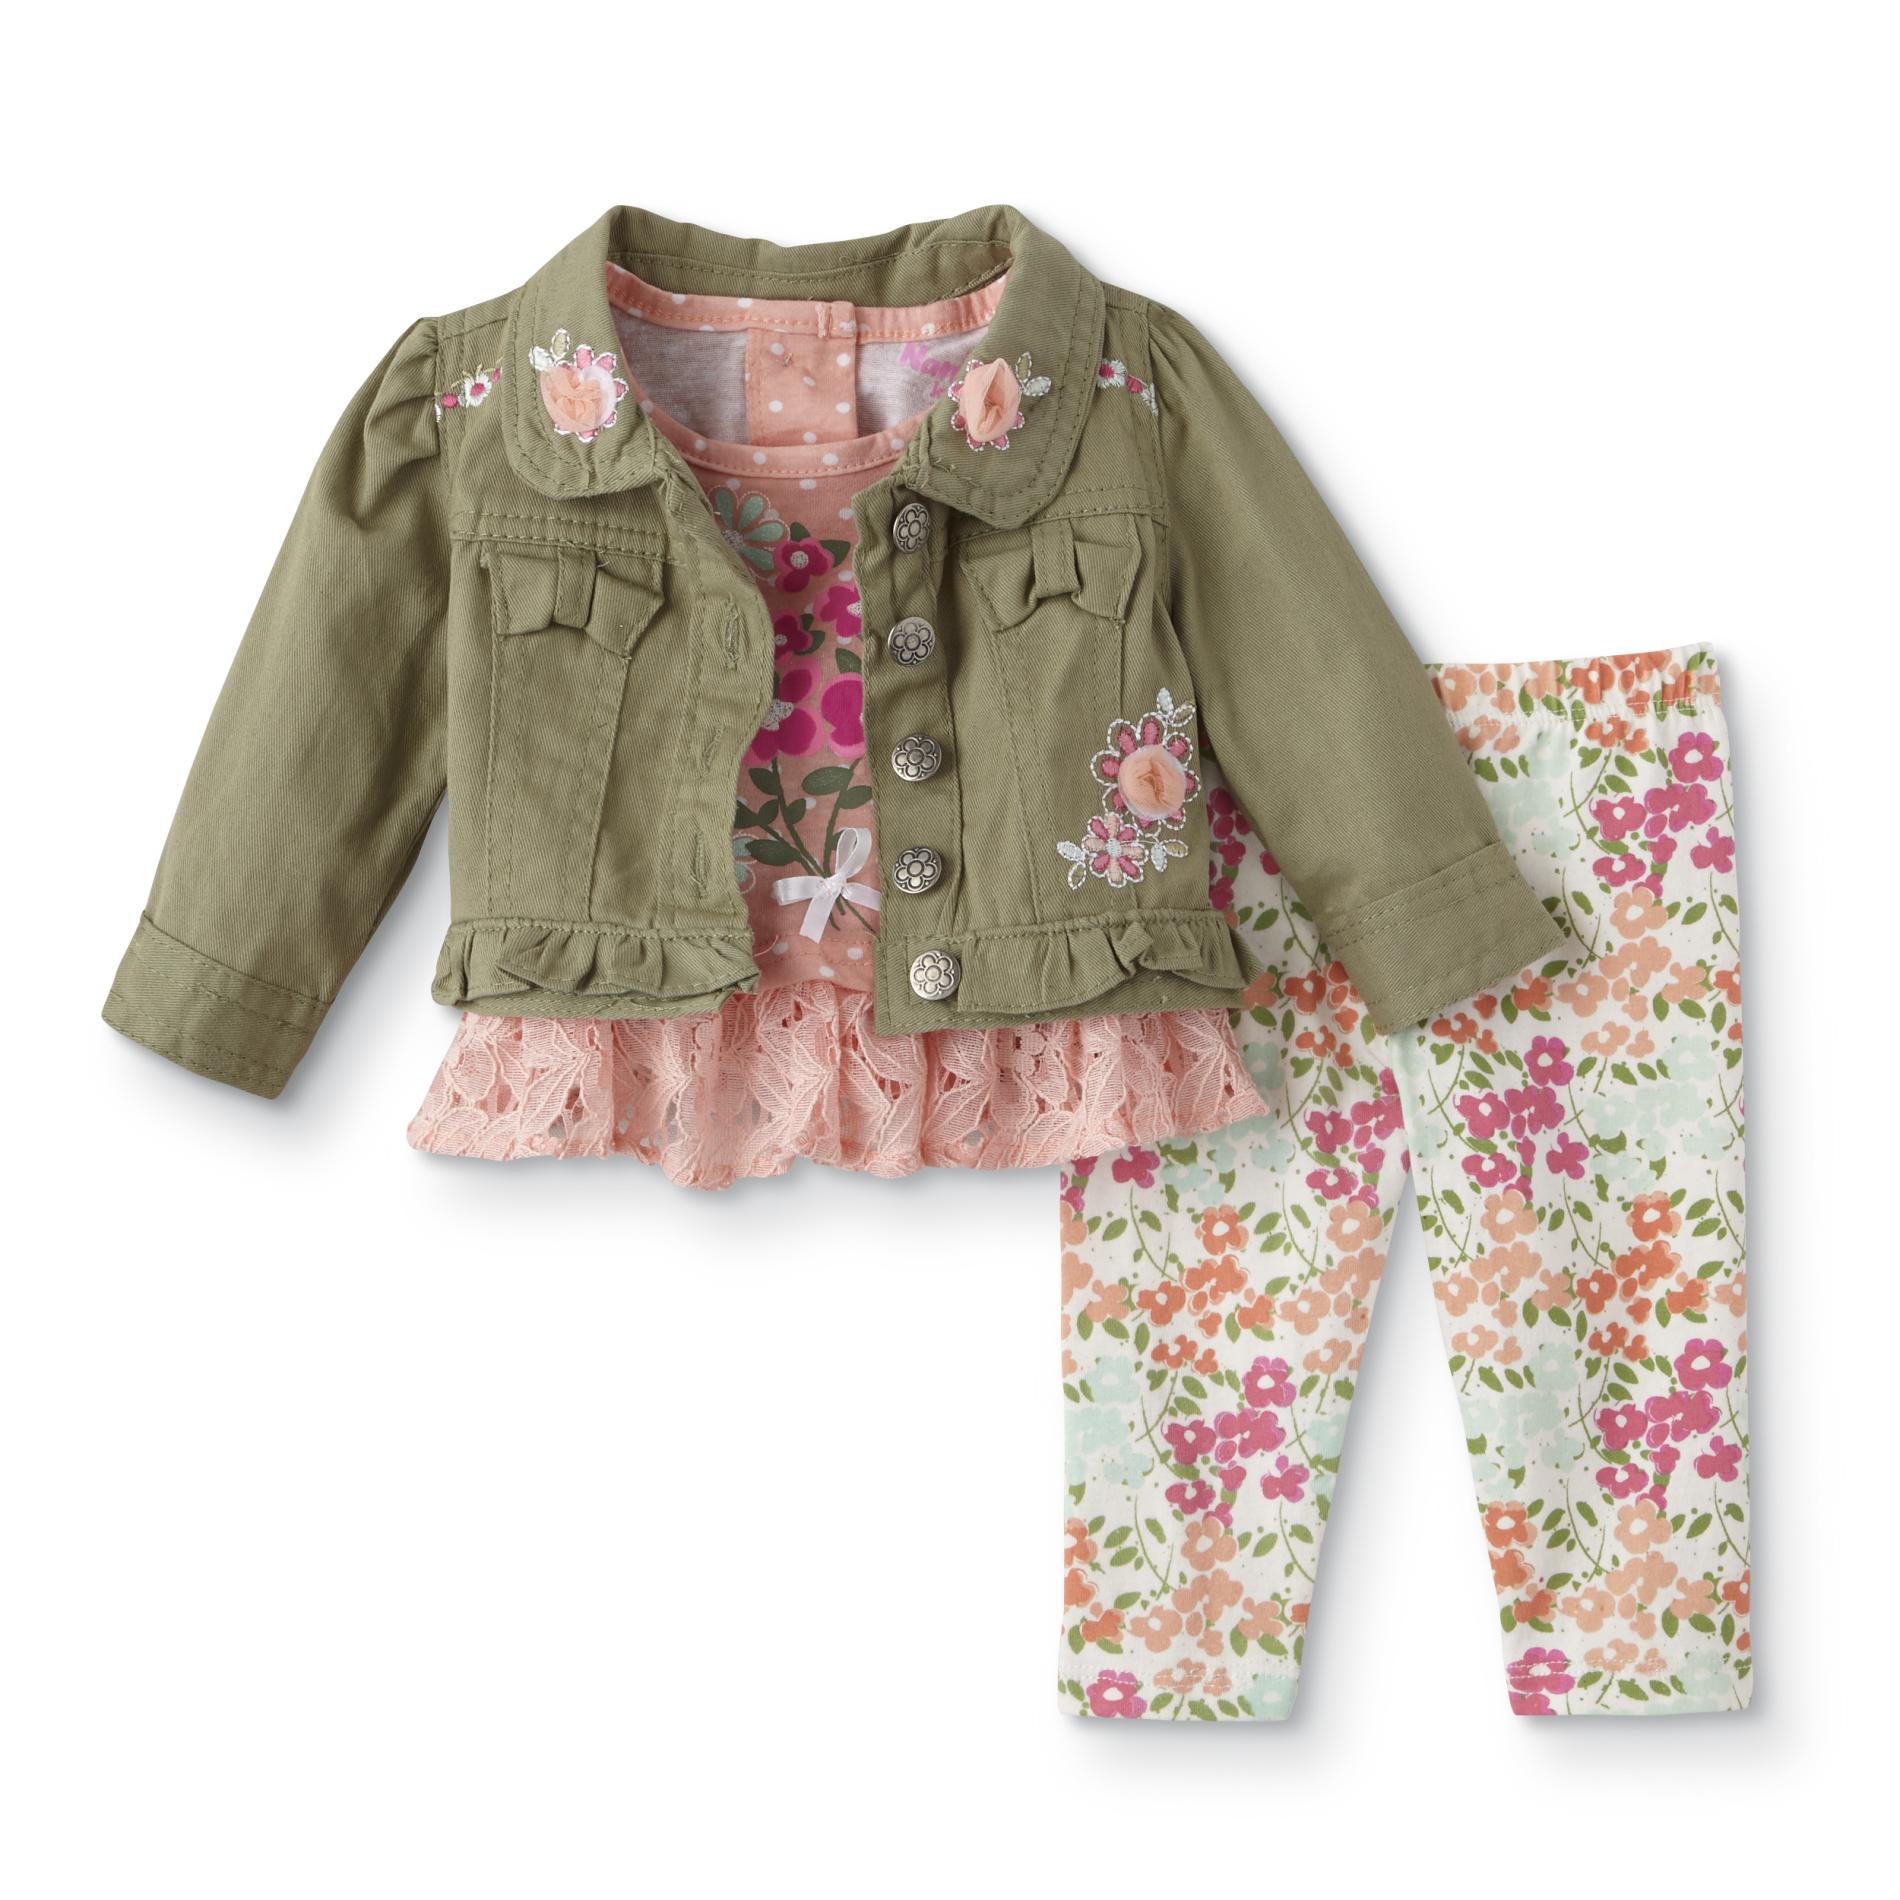 Baby Clothing Sets: Buy Baby Clothing 